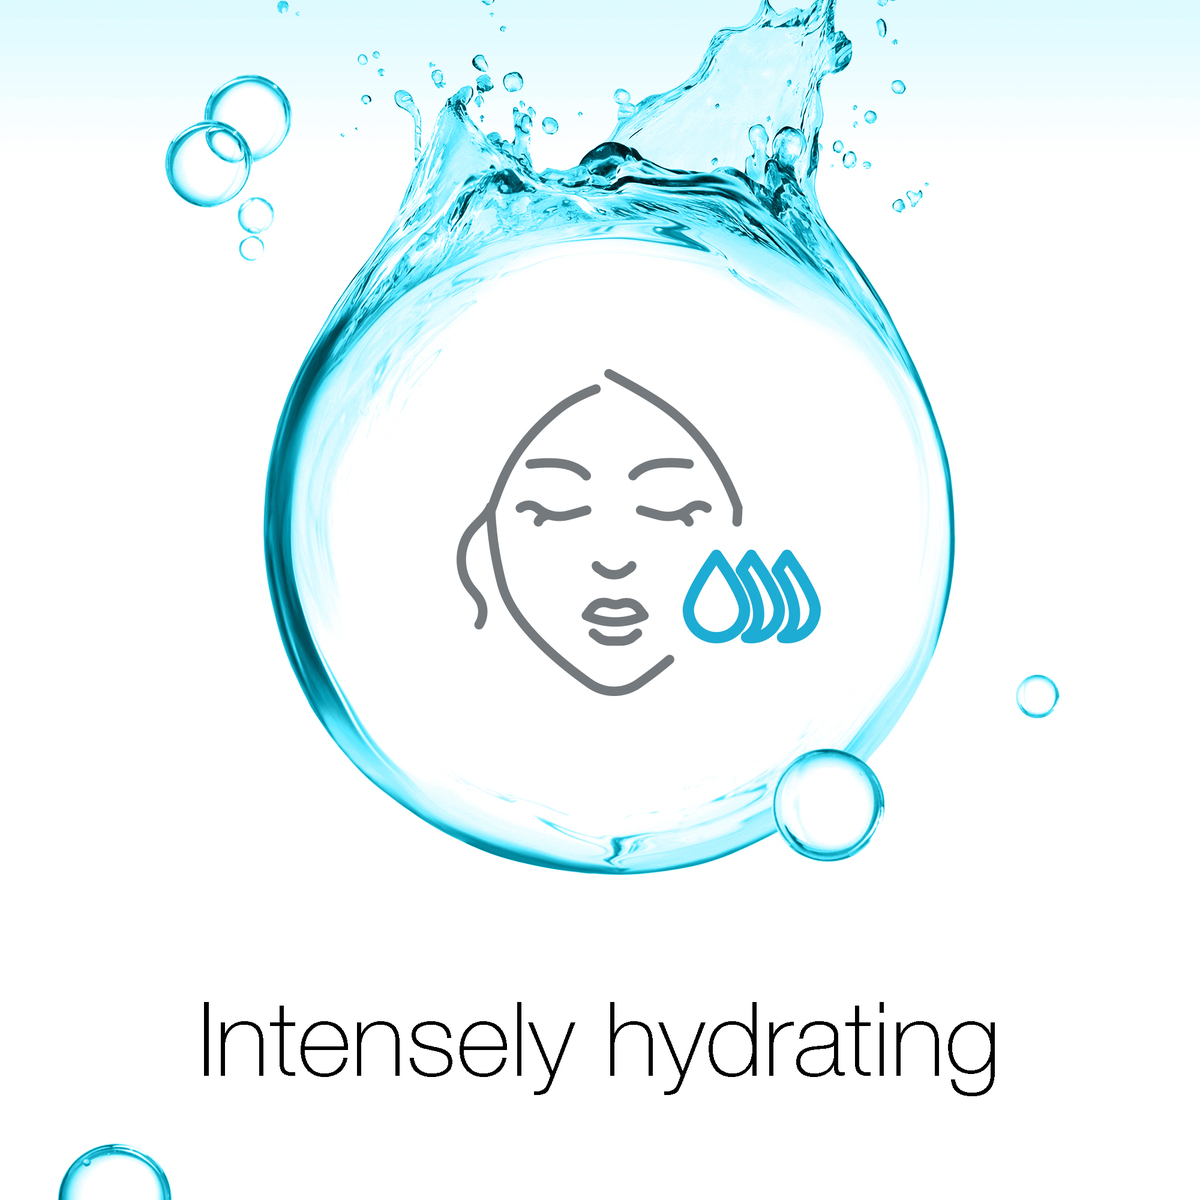 Neutrogena Body Spray Hydro Boost Express Hydrating Normal Skin 200 ml